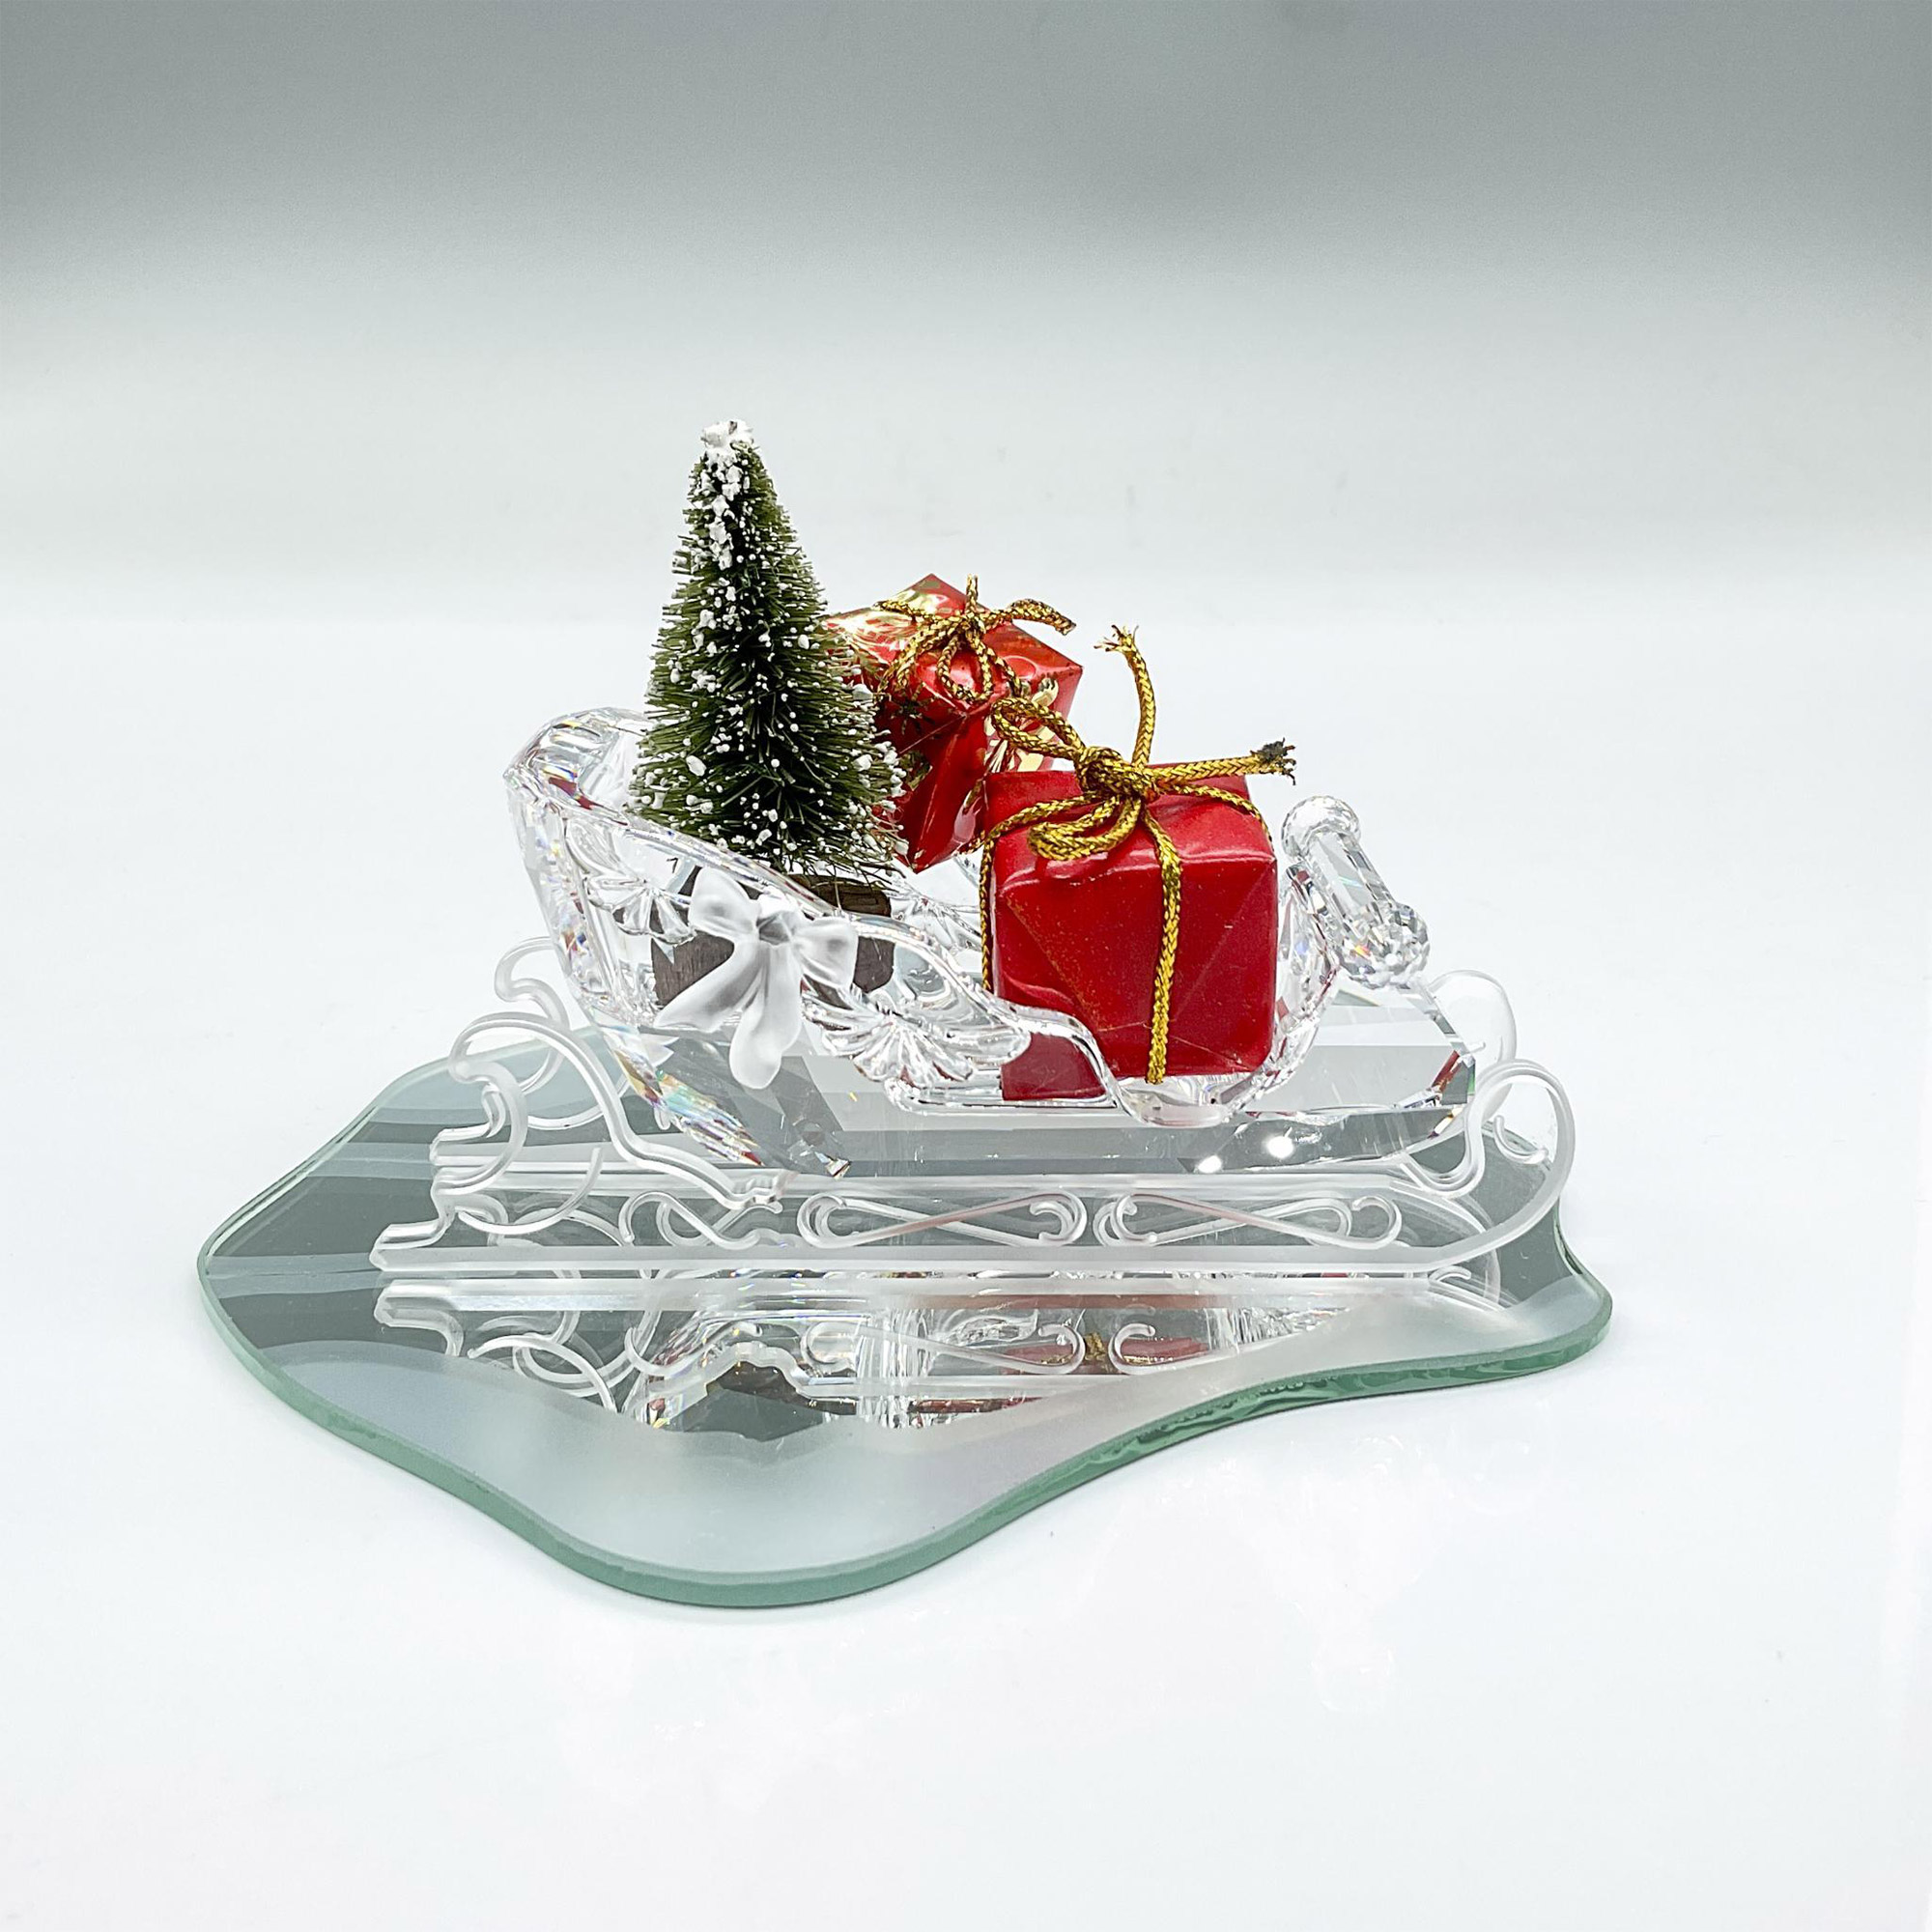 Swarovski Crystal Figurine, Santa's Christmas Sleigh - Image 2 of 5